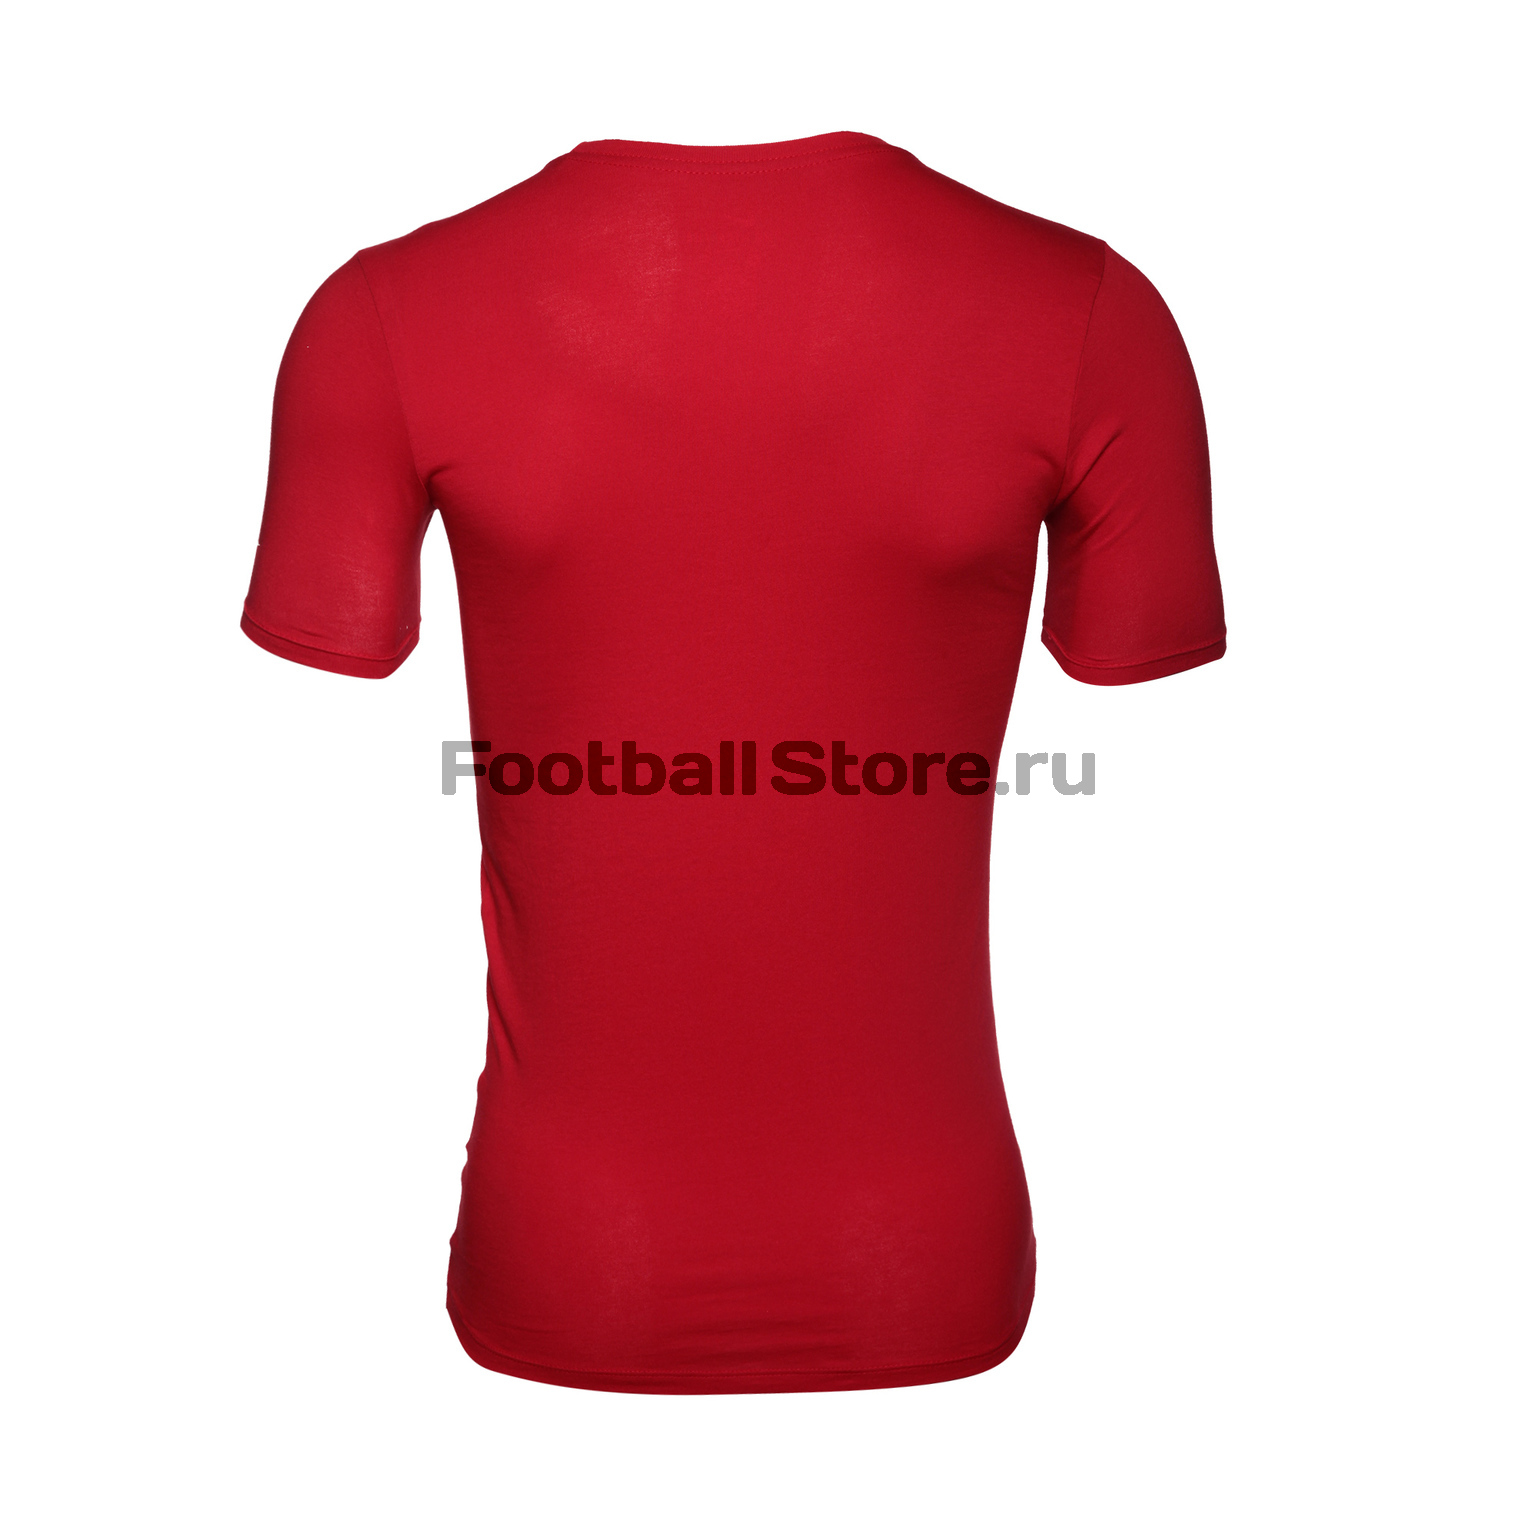 Футболка Nike сборной Португалии 909843-687